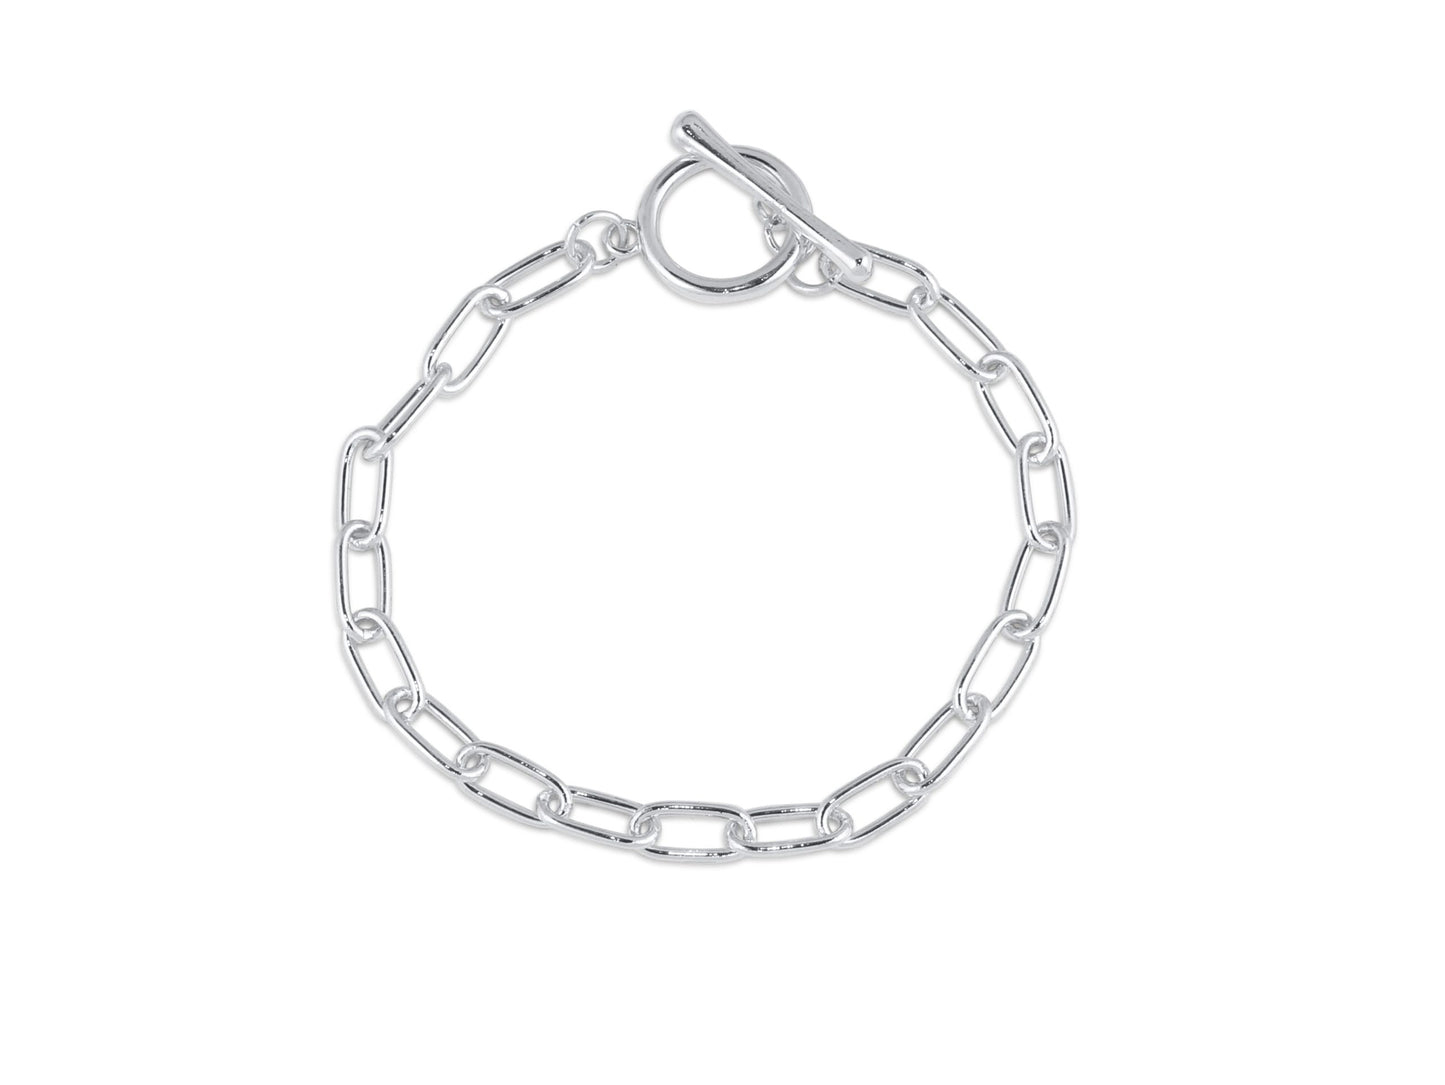 Catherine Oval Links Chain Bracelet